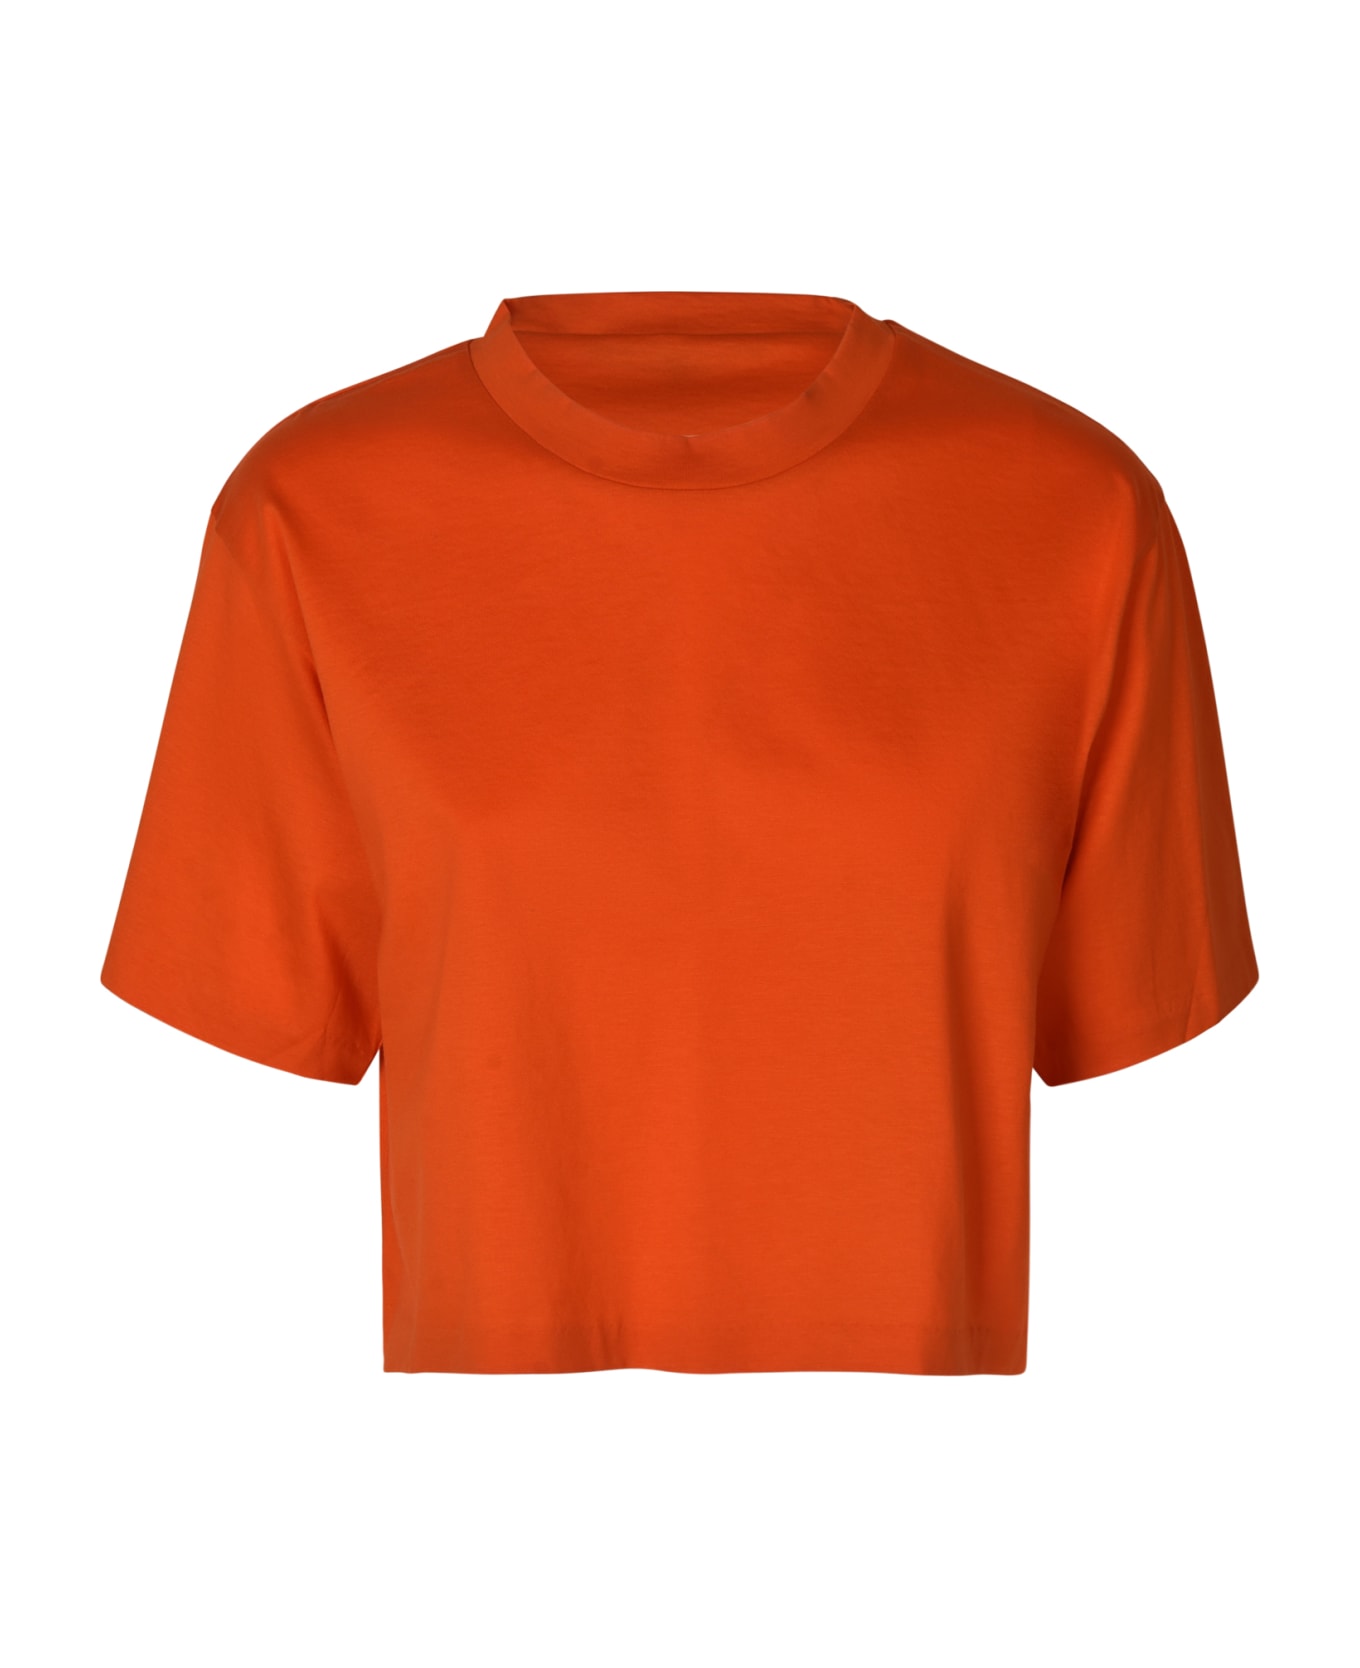 Sofie d'Hoore Tour Jel T-shirt - Tangerine